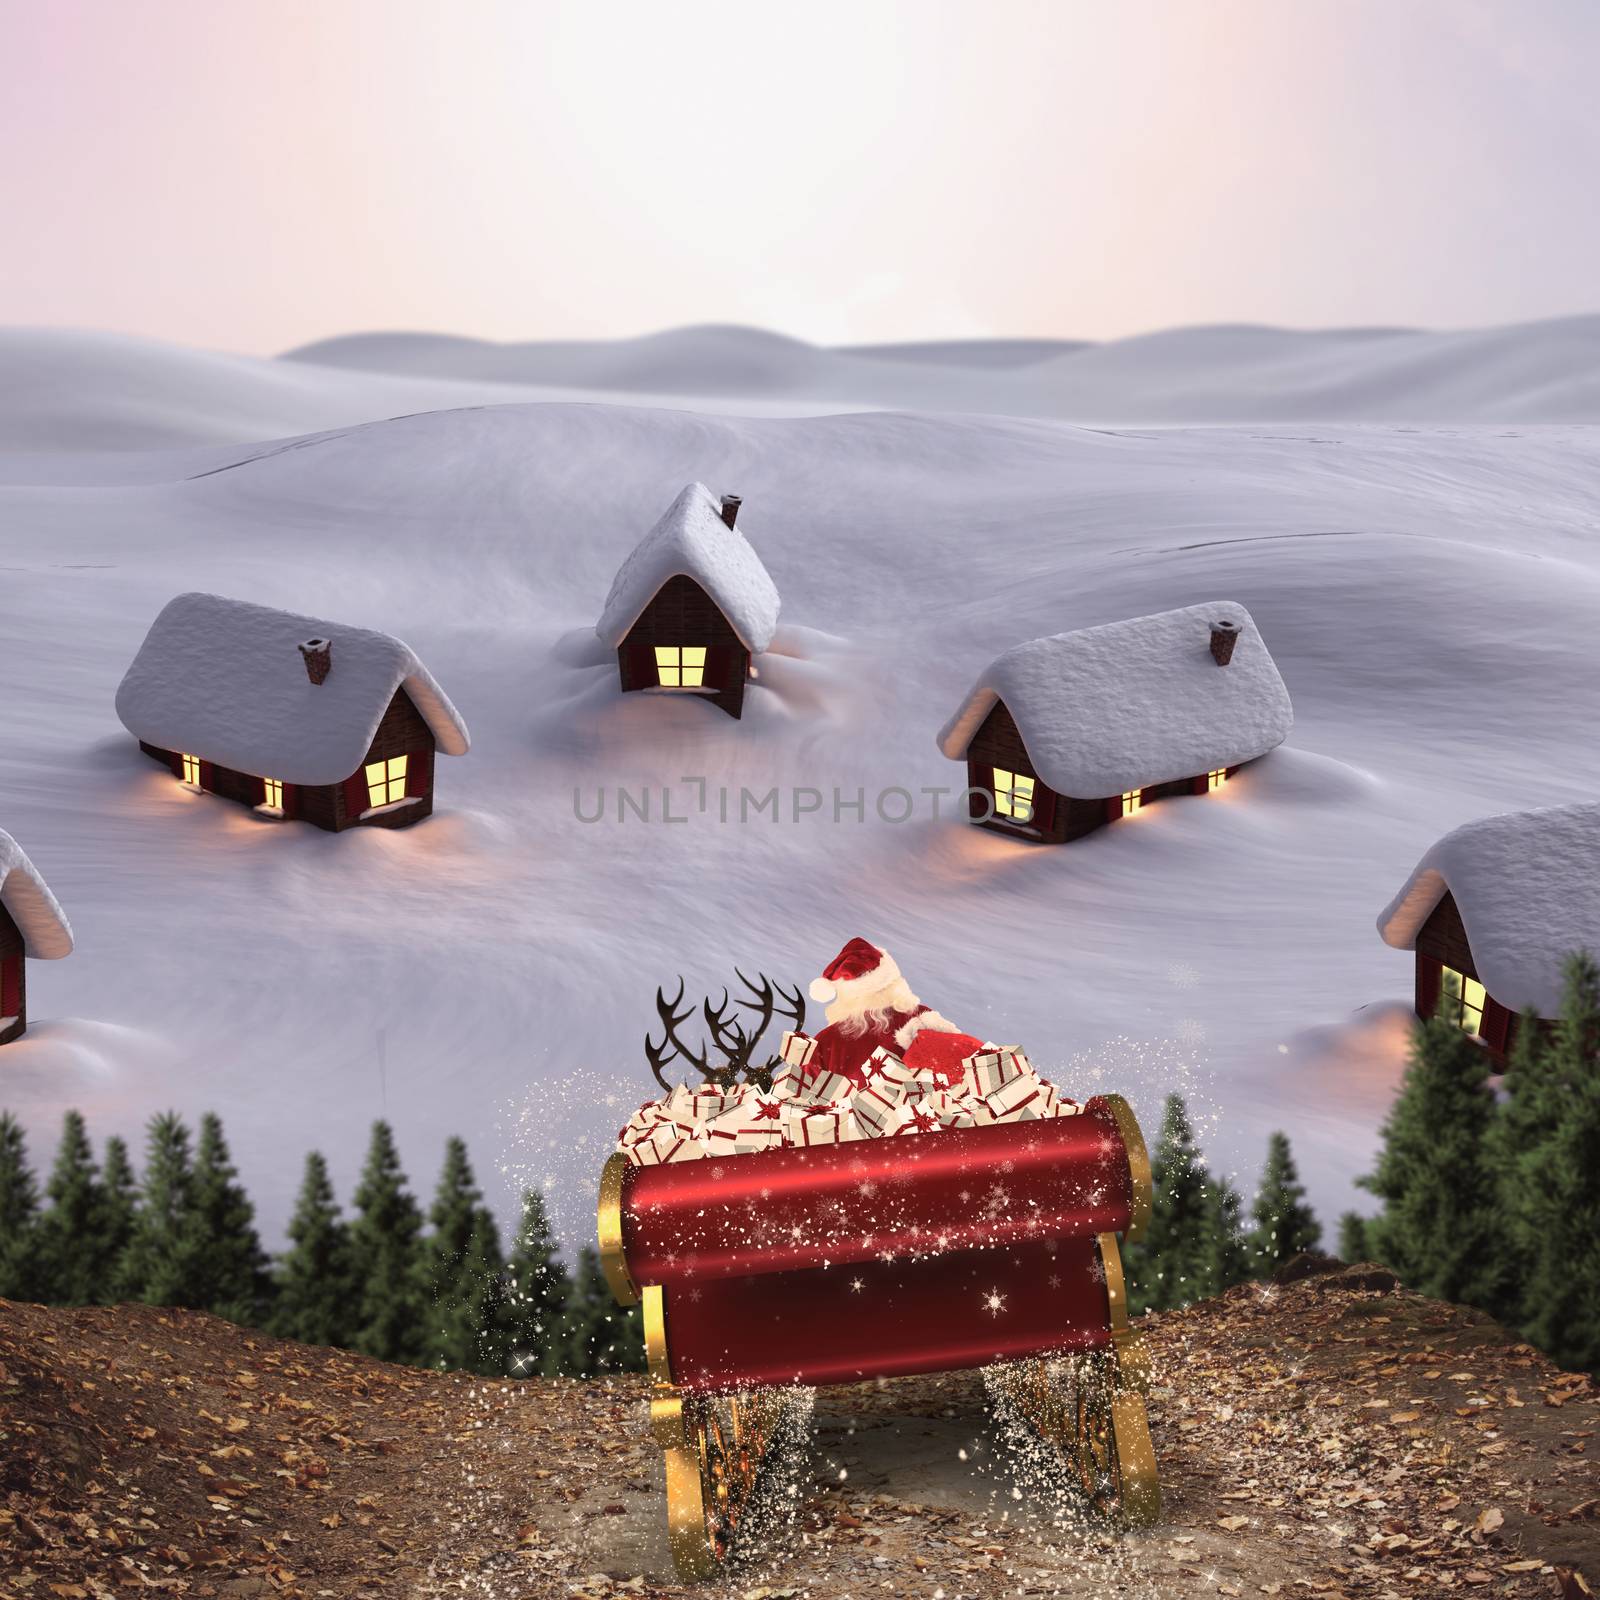 Santa flying his sleigh against cute village in the snow